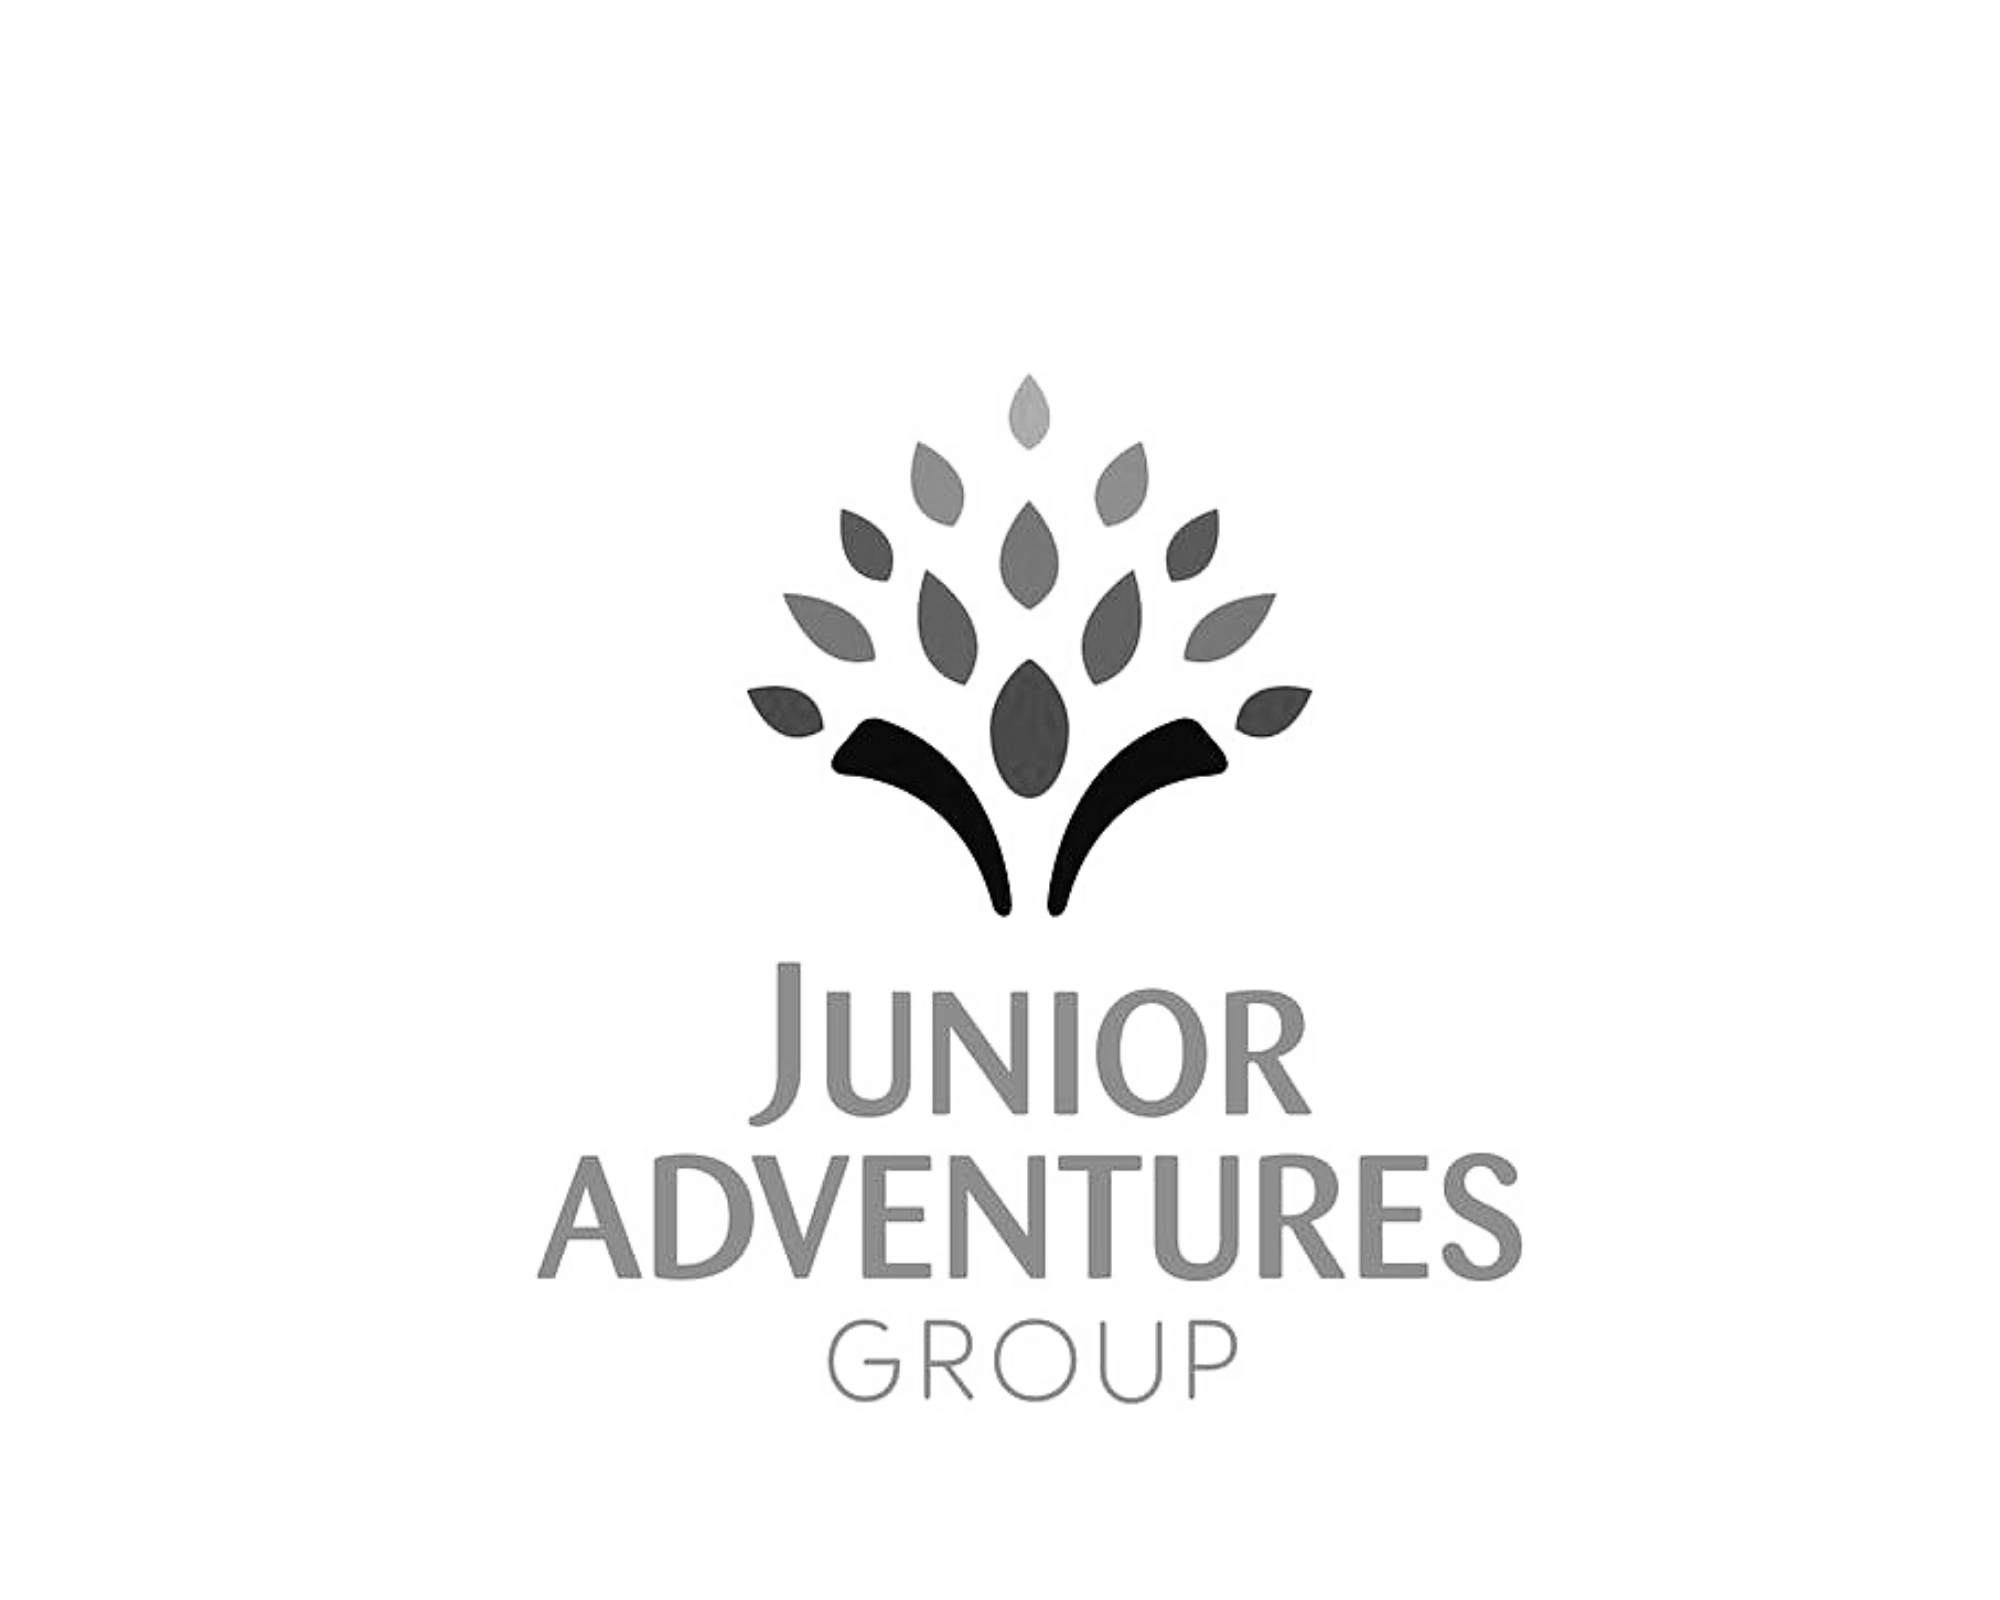 Junior Adventures Group logo